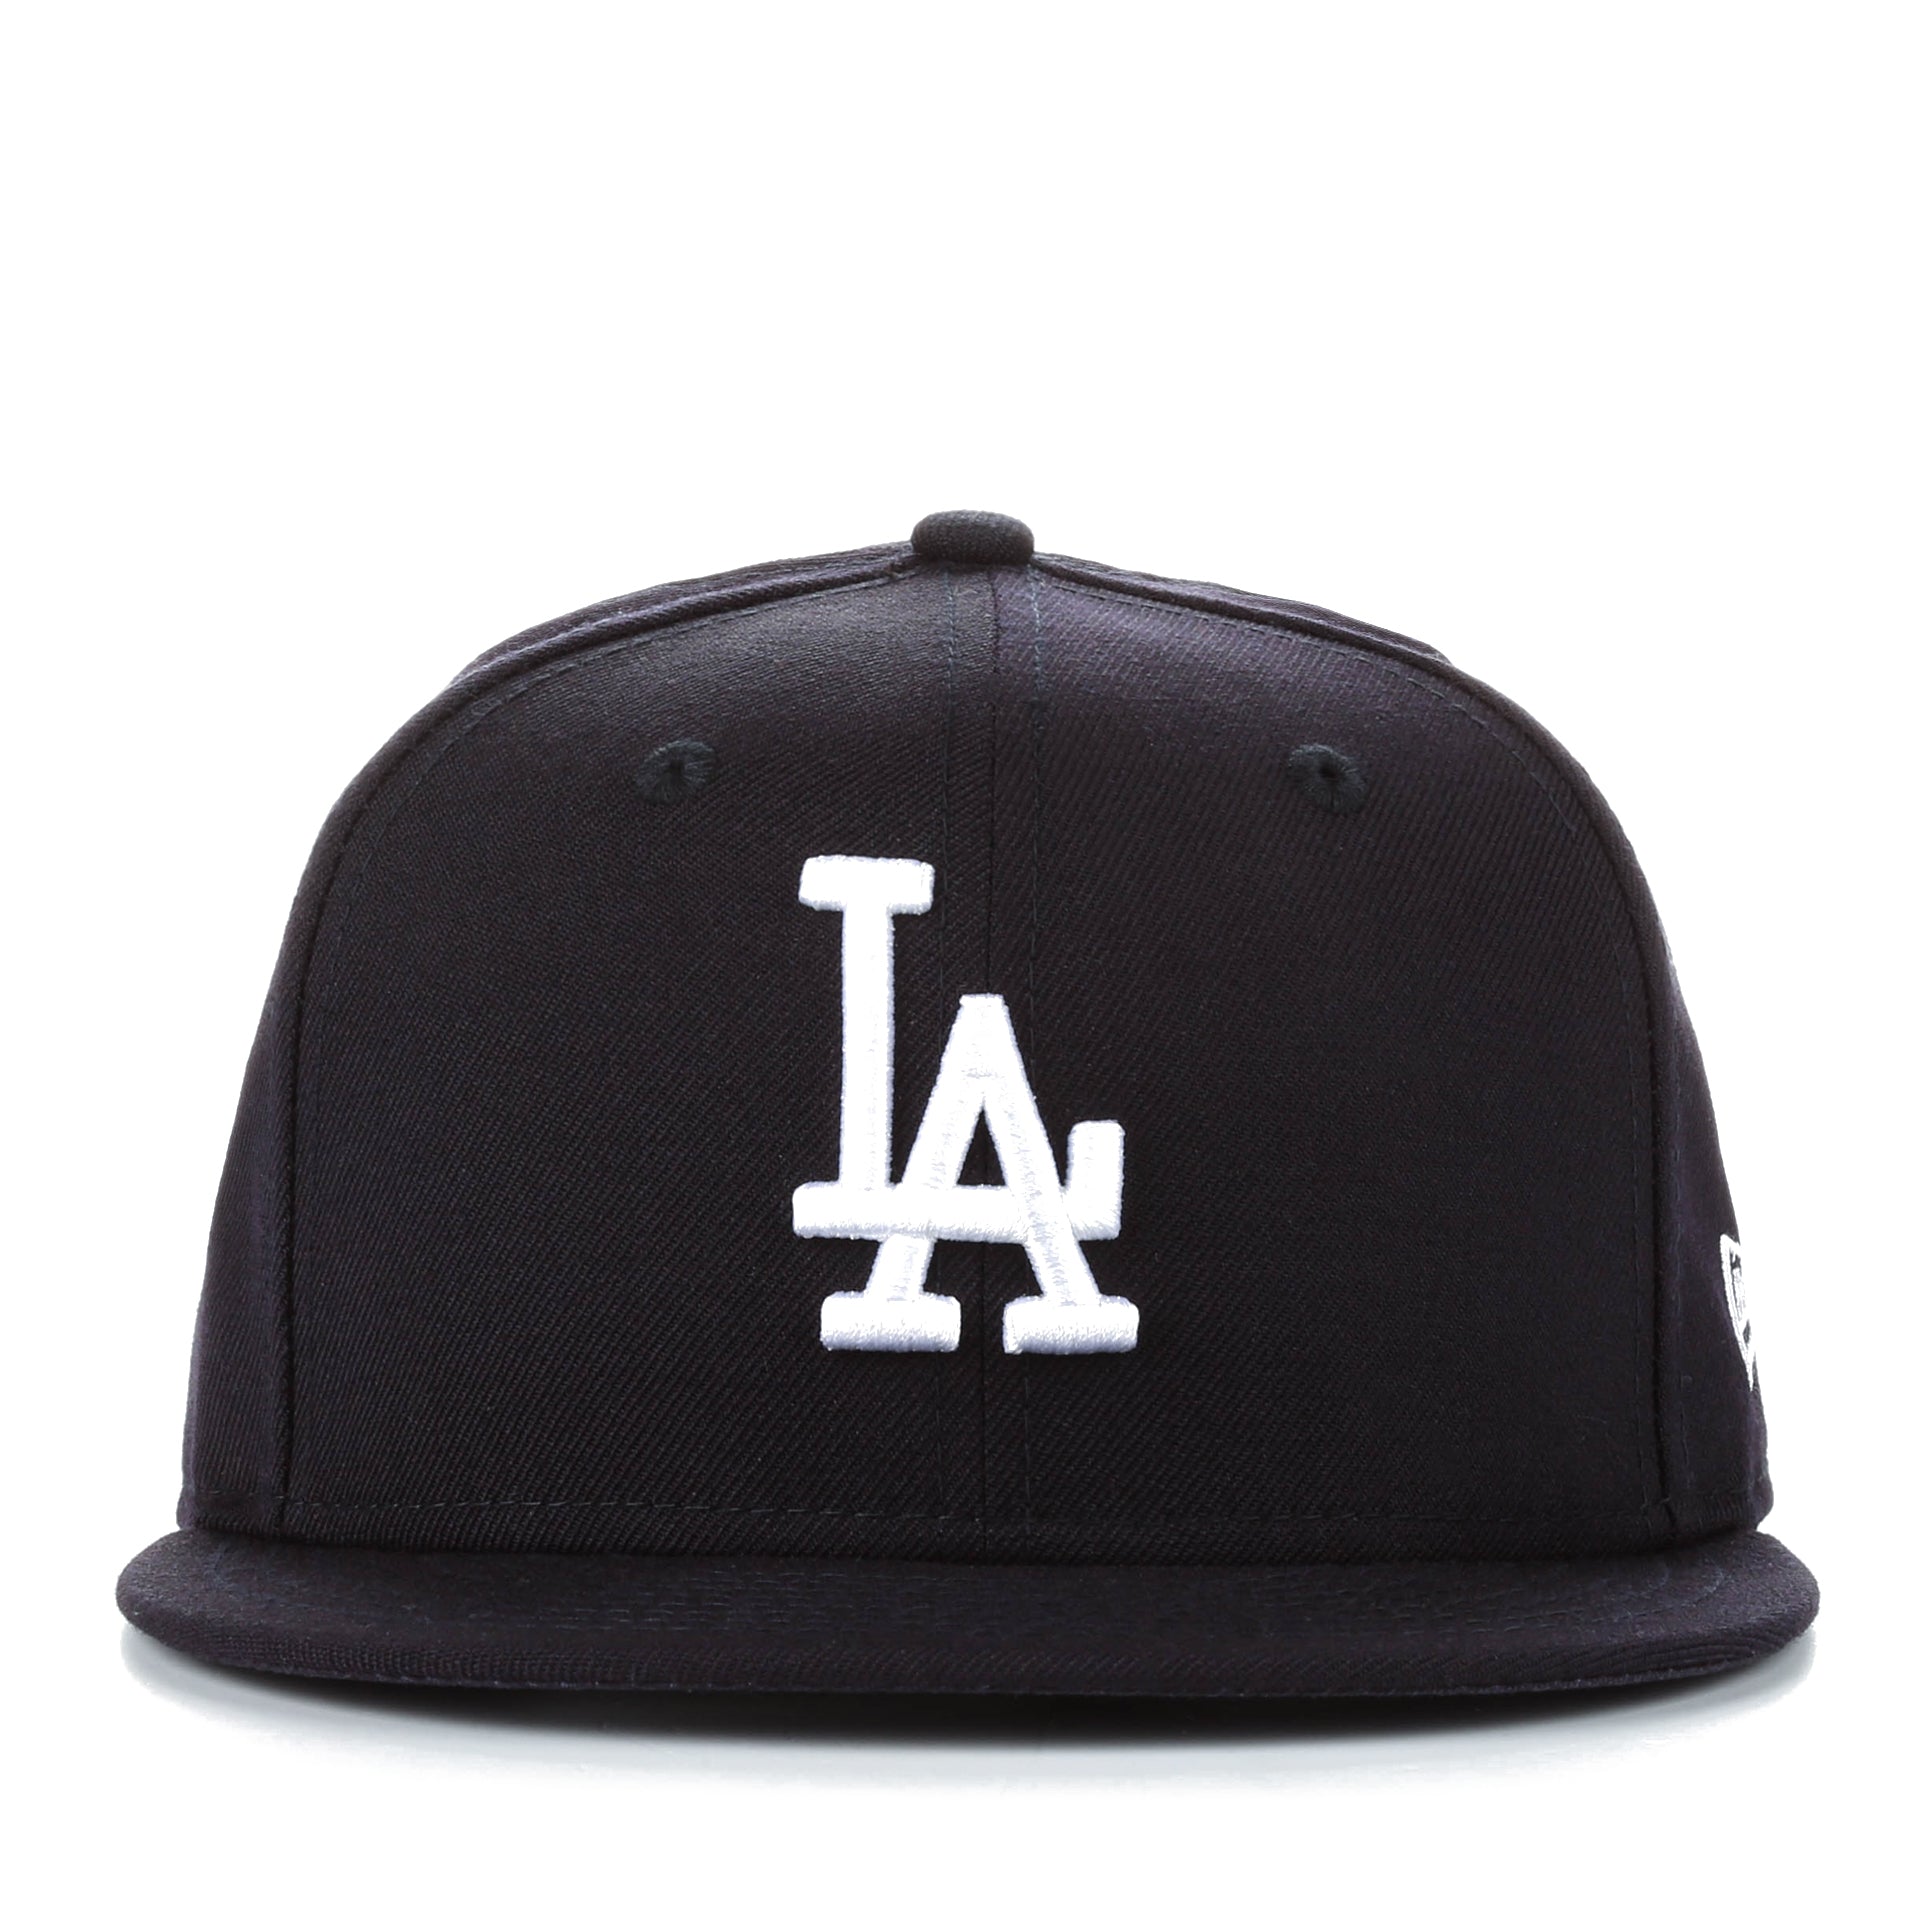 Burgerschap Gewoon fontein New Era 59Fifty Wool MLB Basic Fitted Cap - Los Angeles Dodgers/Navy - New  Star